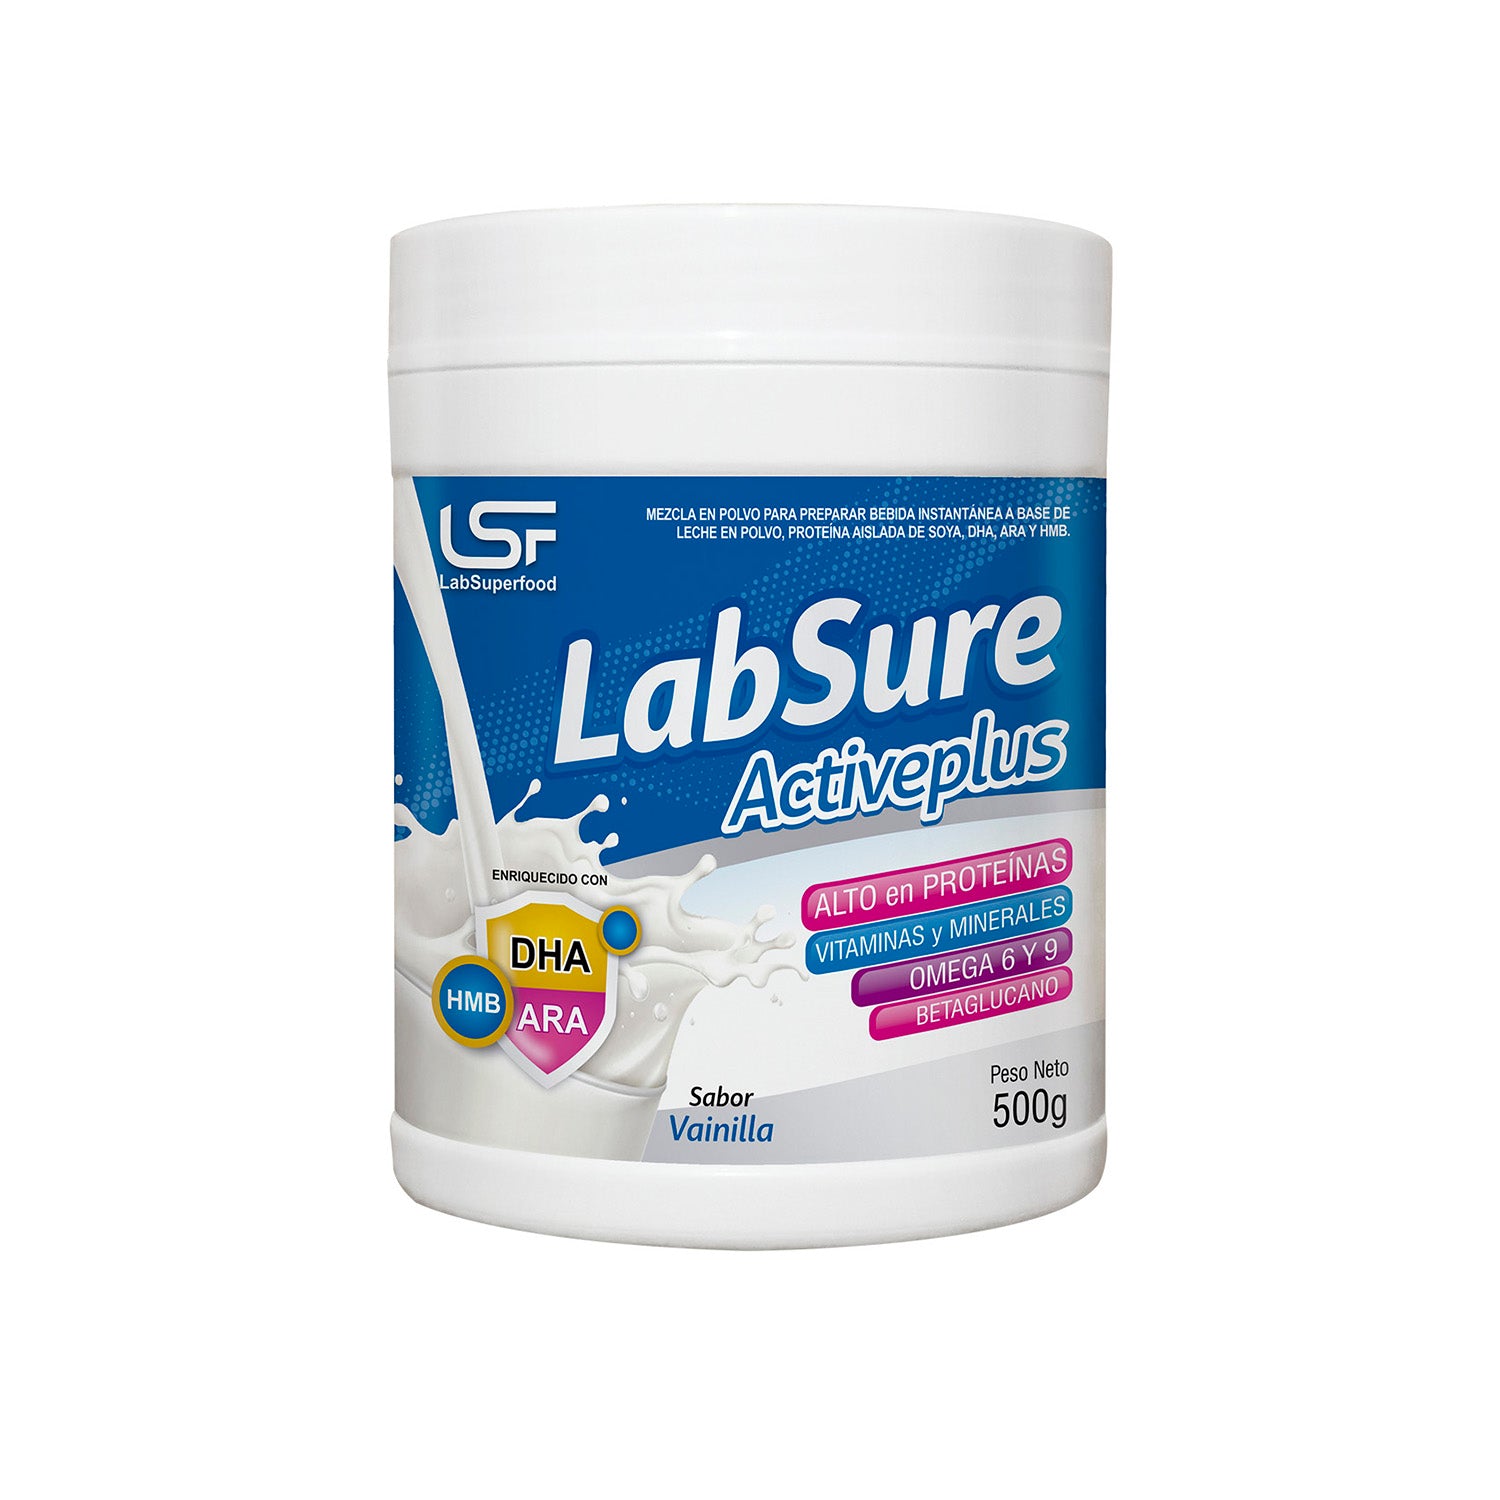 Labsure Activeplus - Pot - 500g